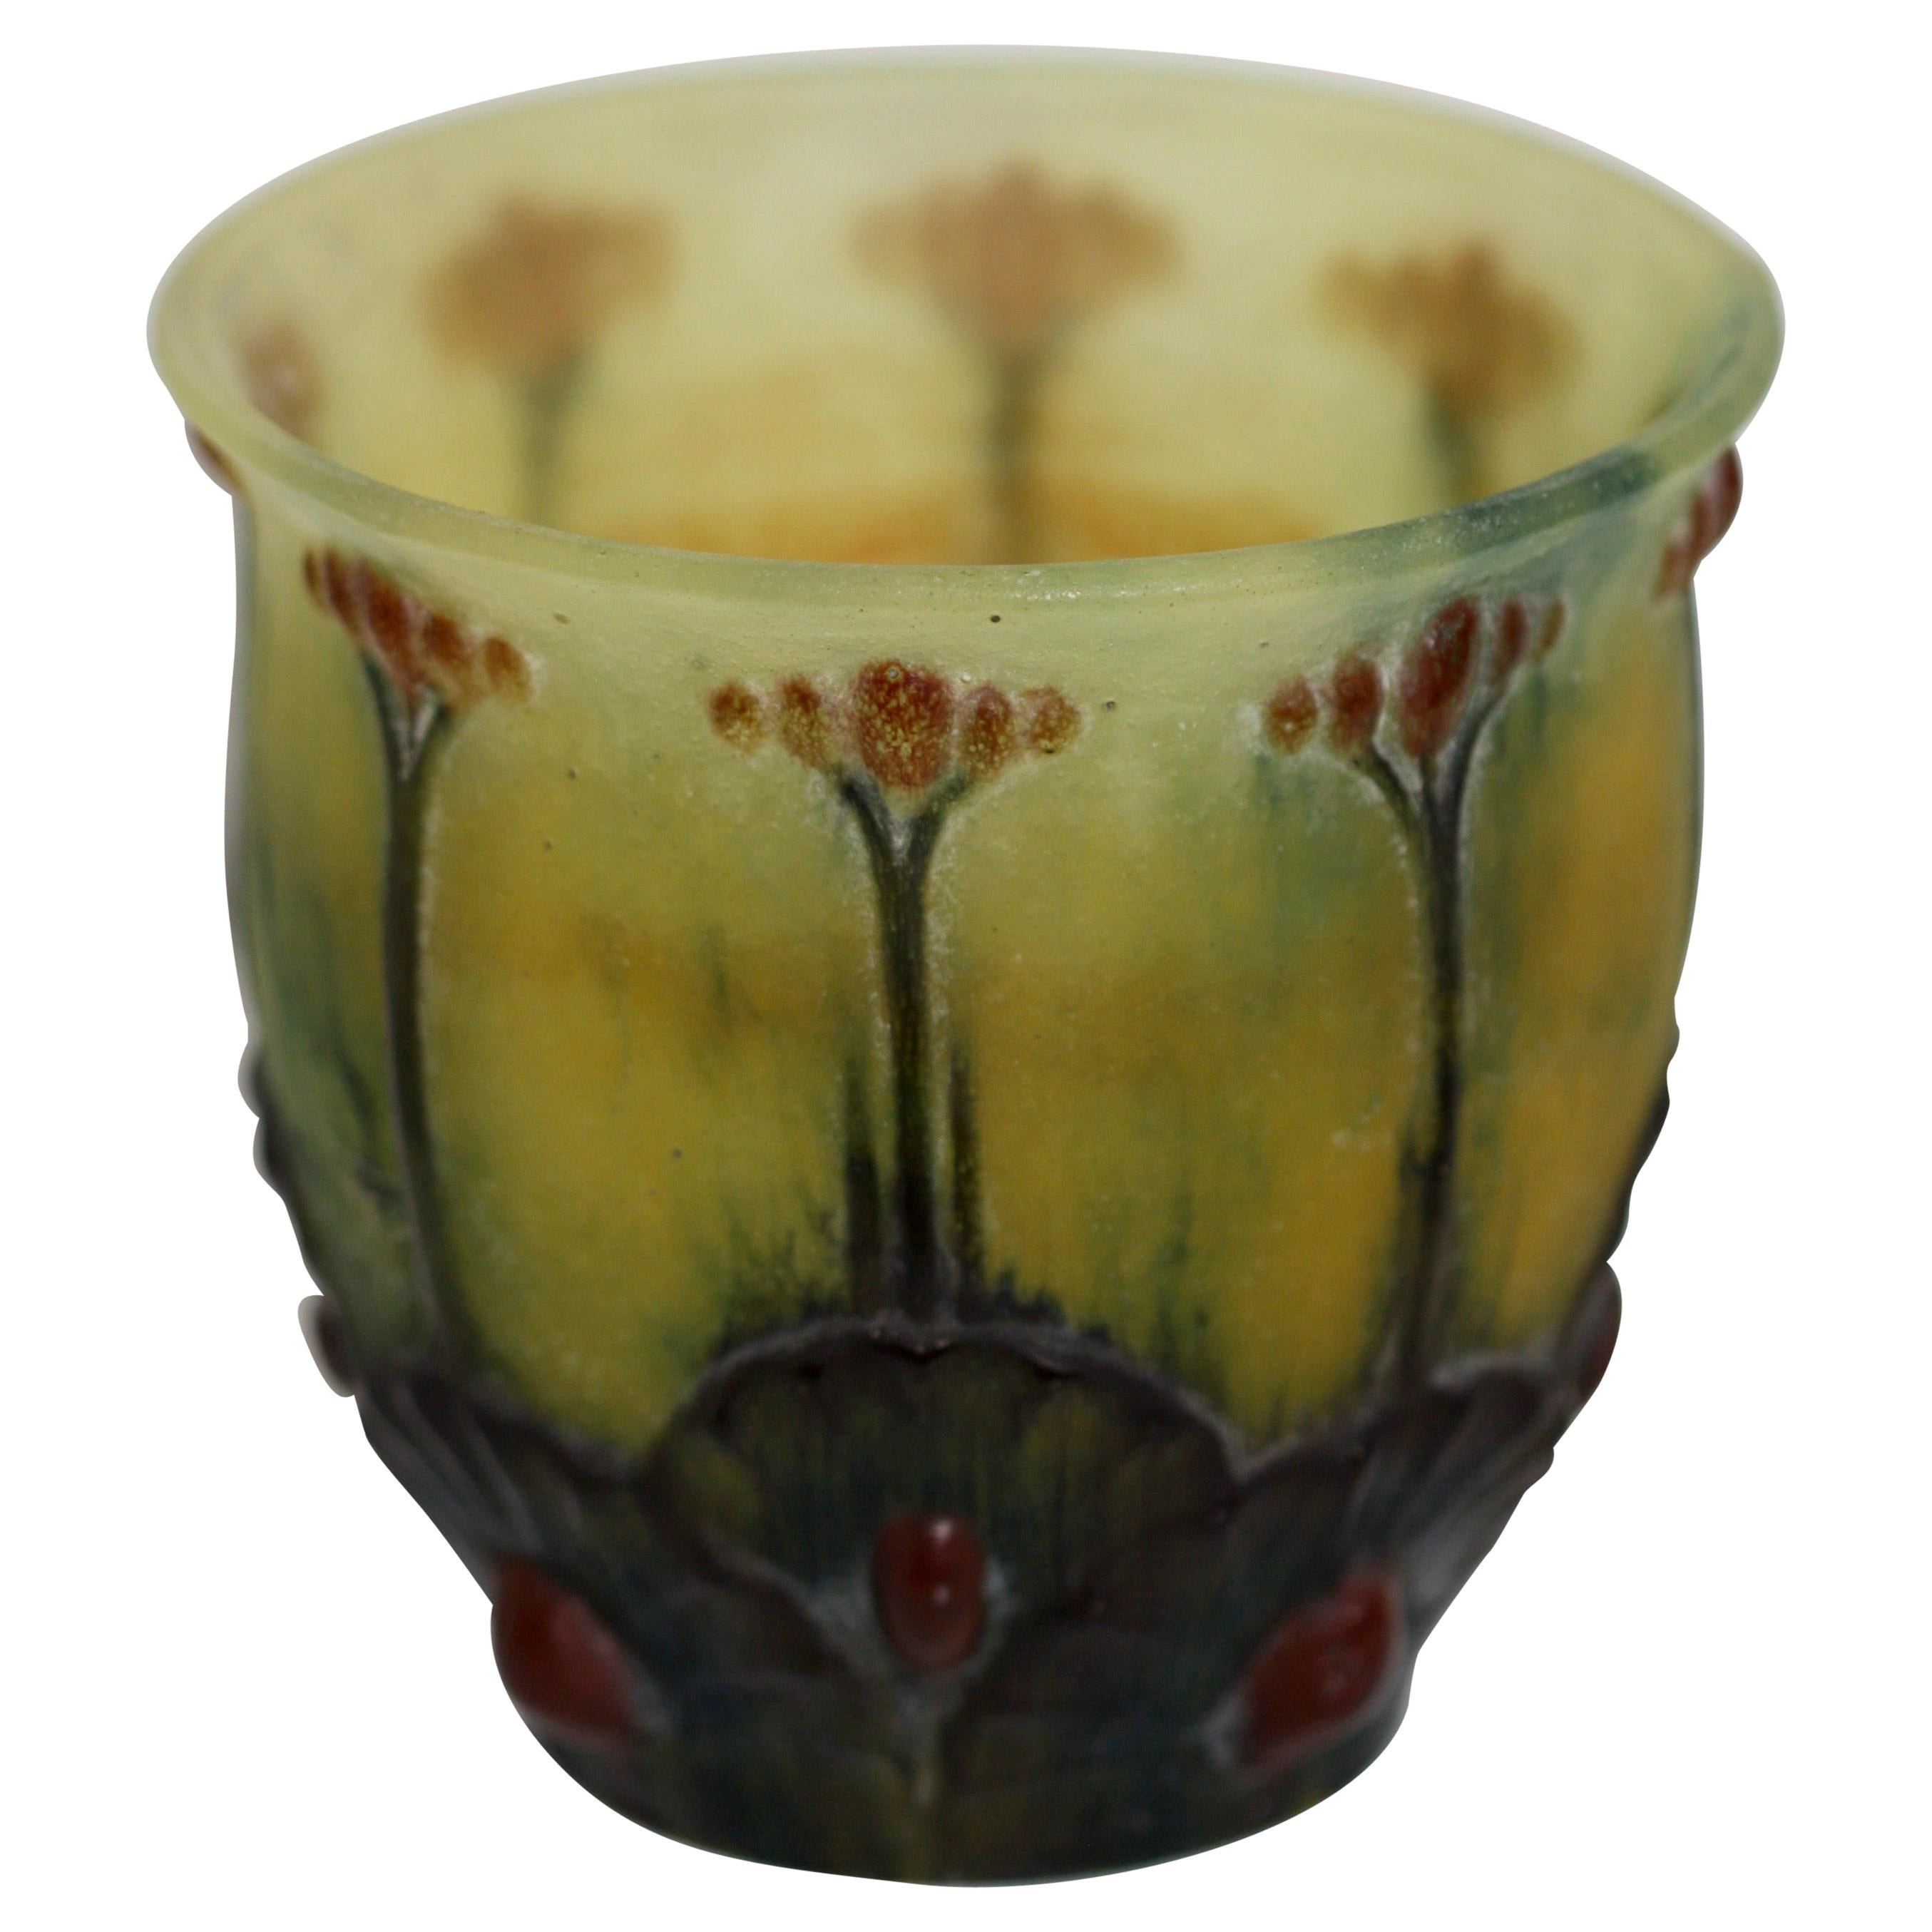 Almeric Walter Pate de verre Vase Designed by Corretic, France, circa 1925